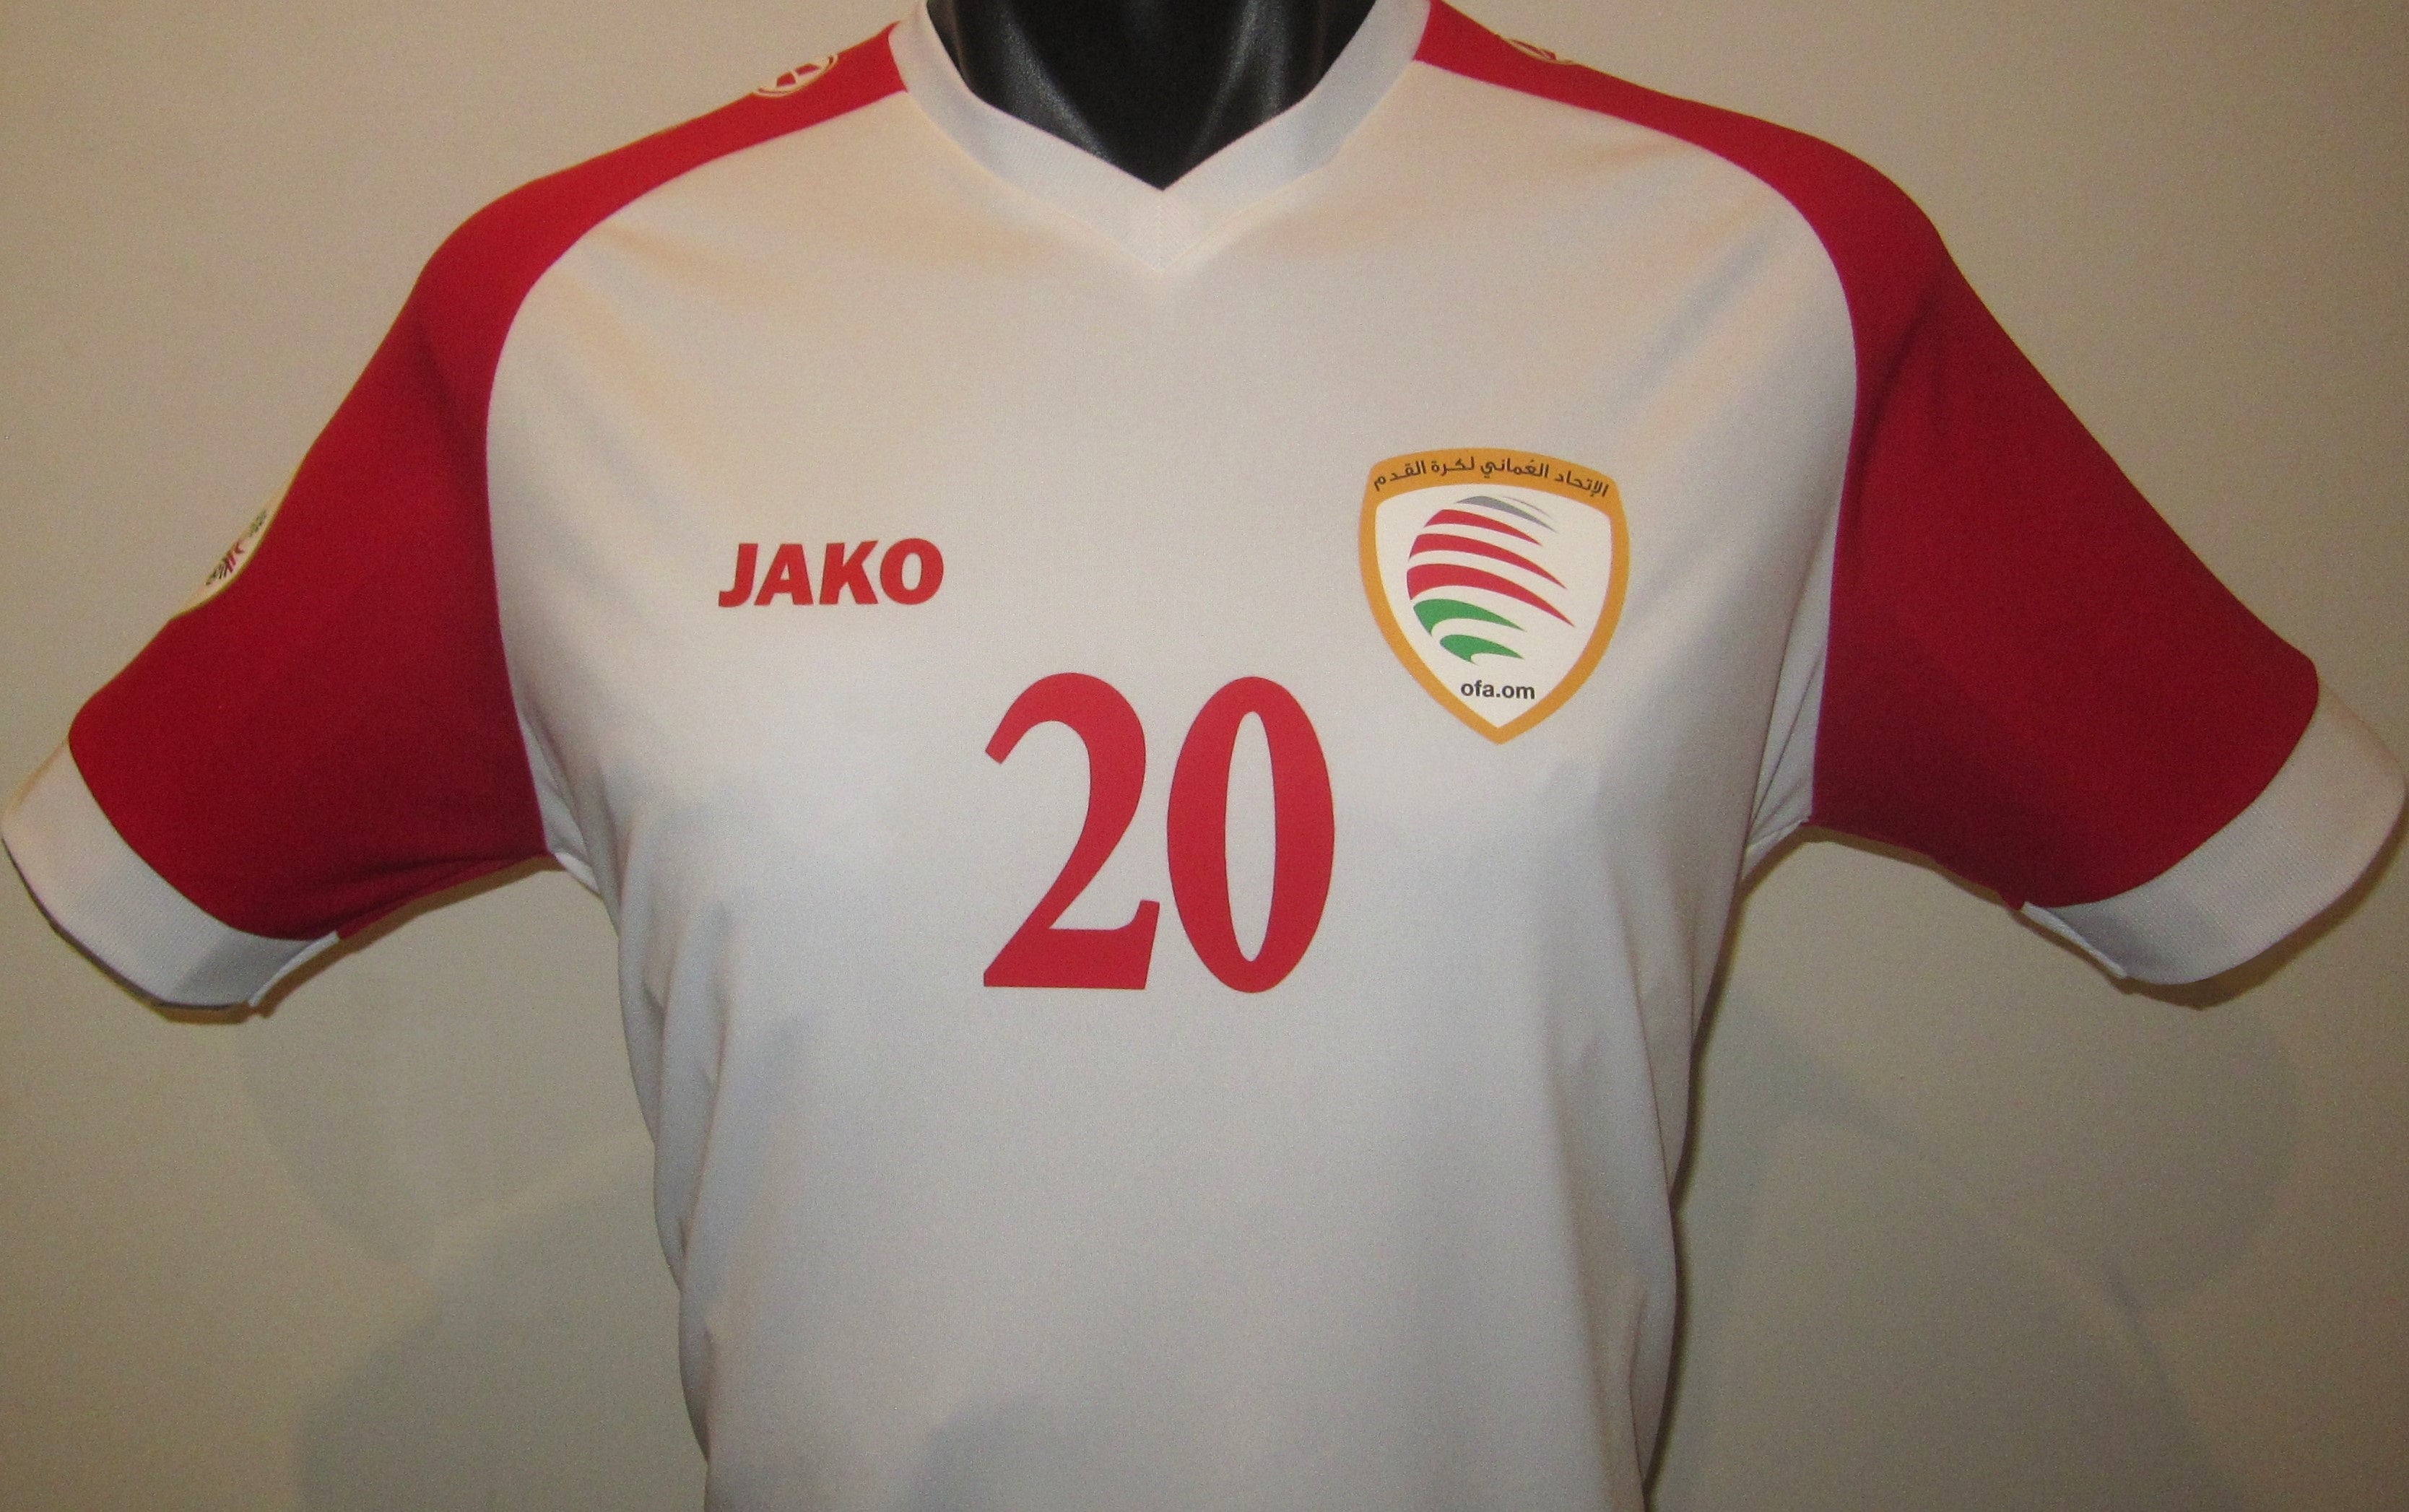 Oman 2022-23 Home (SALAAH #20) Jersey/Shirt